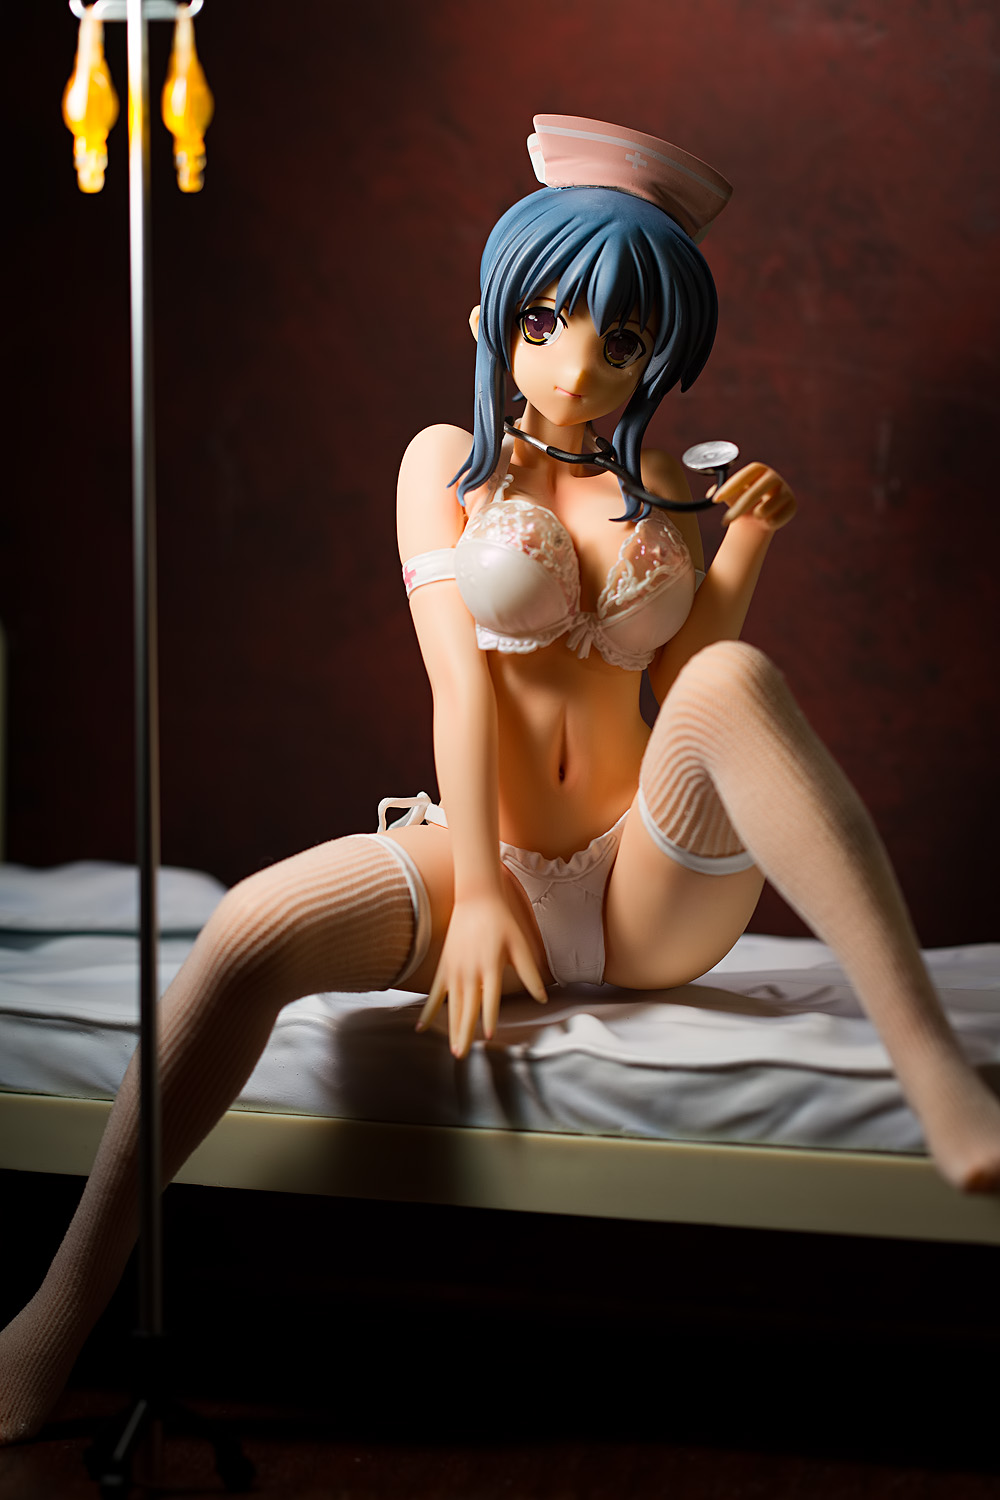 Anatomically Correct Hentai Porn - ER Nurse Miyuu from the Daydream Collection (NSFW ...